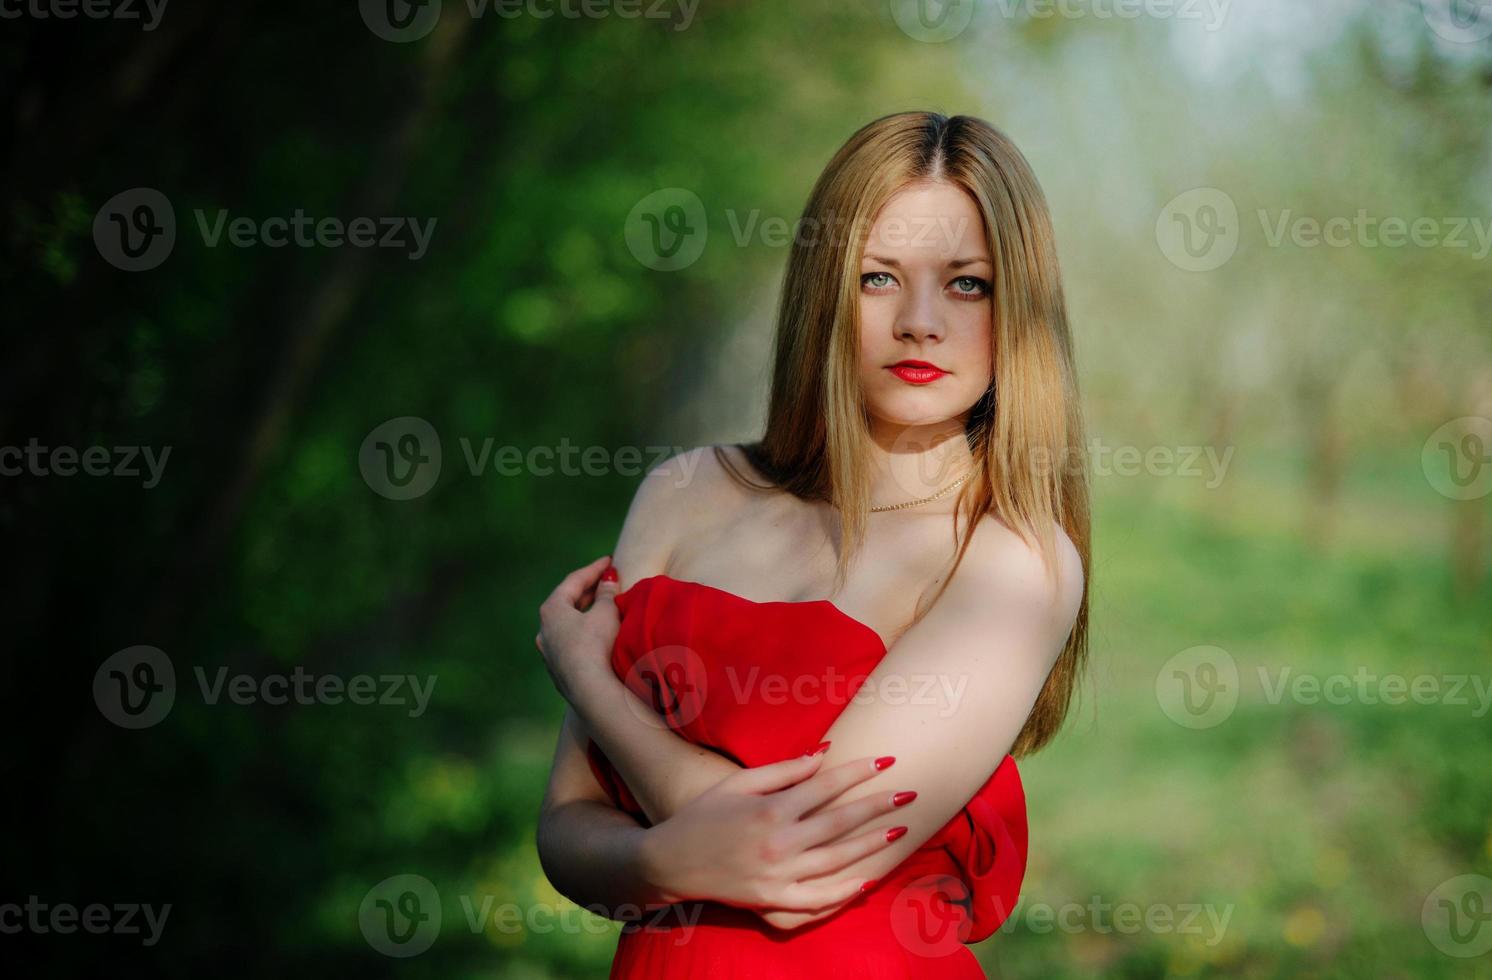 portret van licht haar meisje op rode jurk achtergrond lentetuin. foto